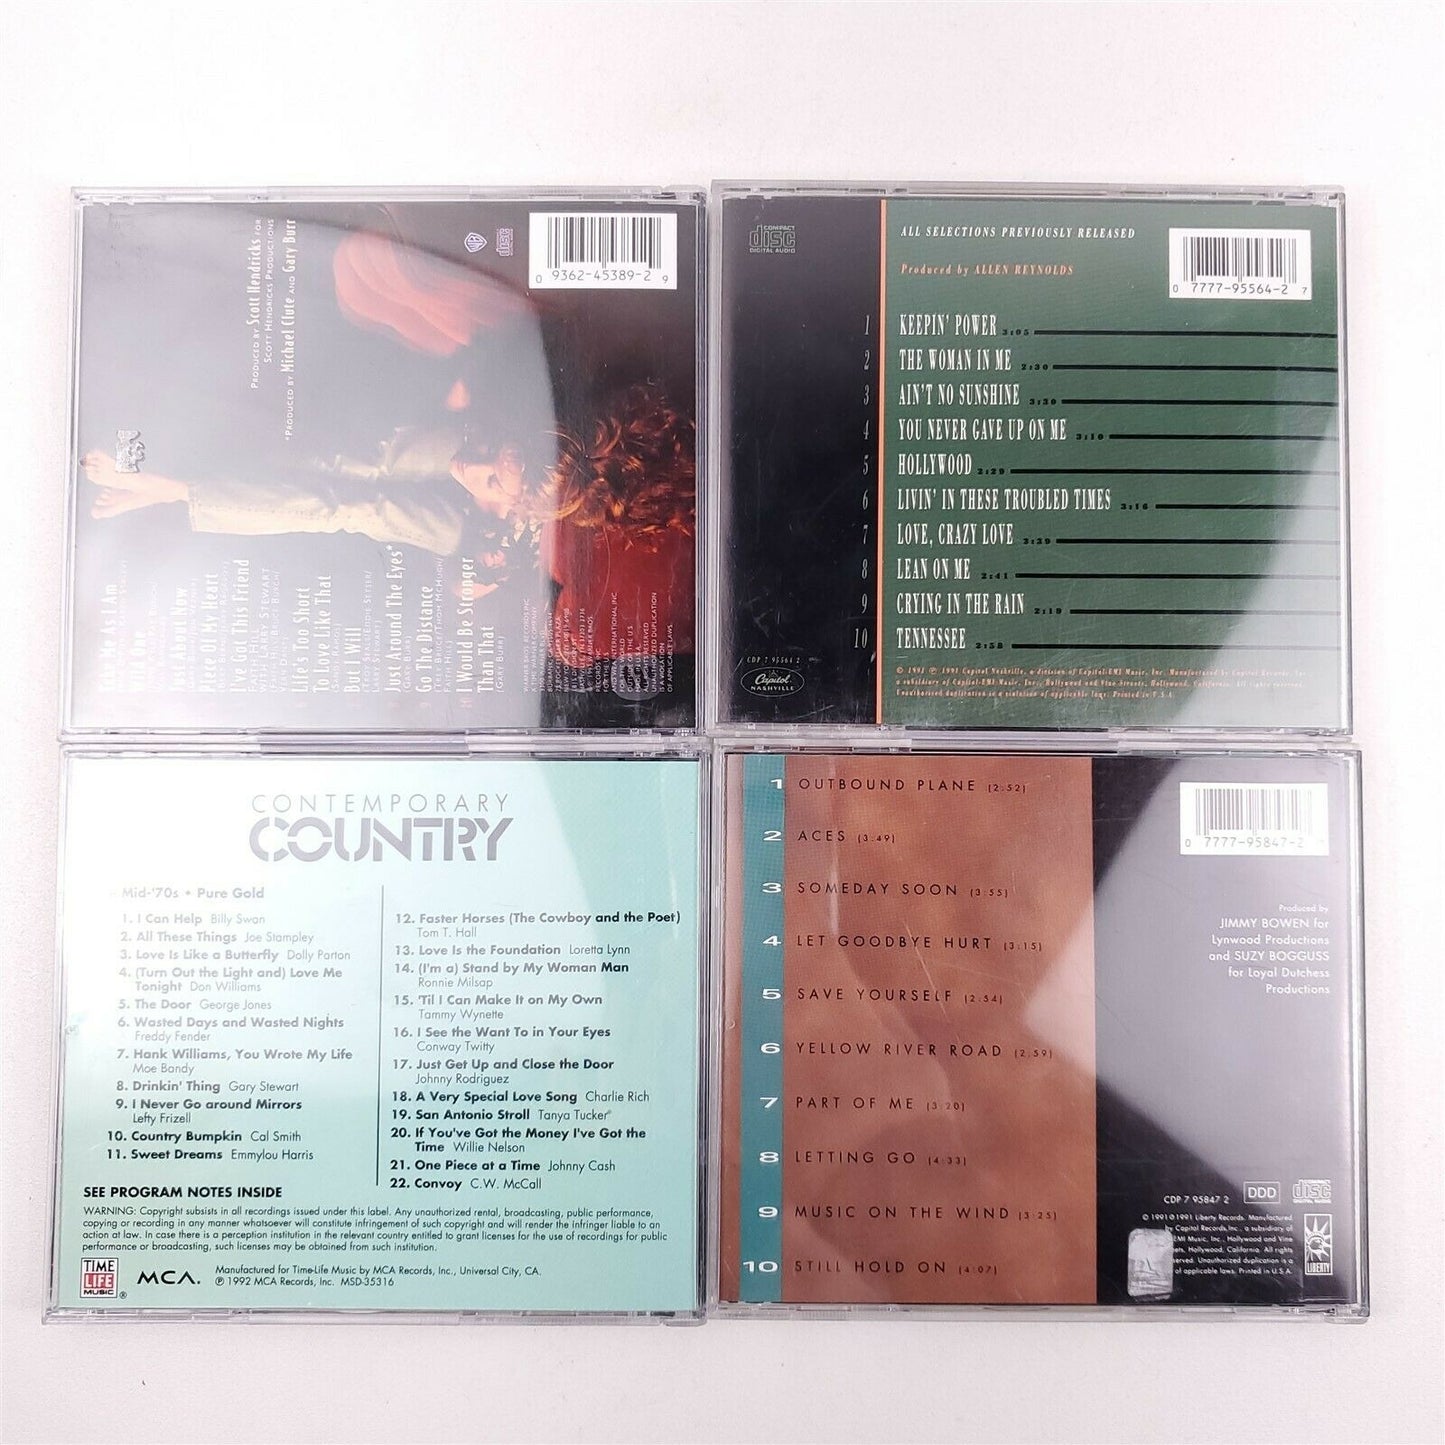 8 Female Country Artist CD's - Faith Hill, Tanya Tucker, Suzy Bogguss